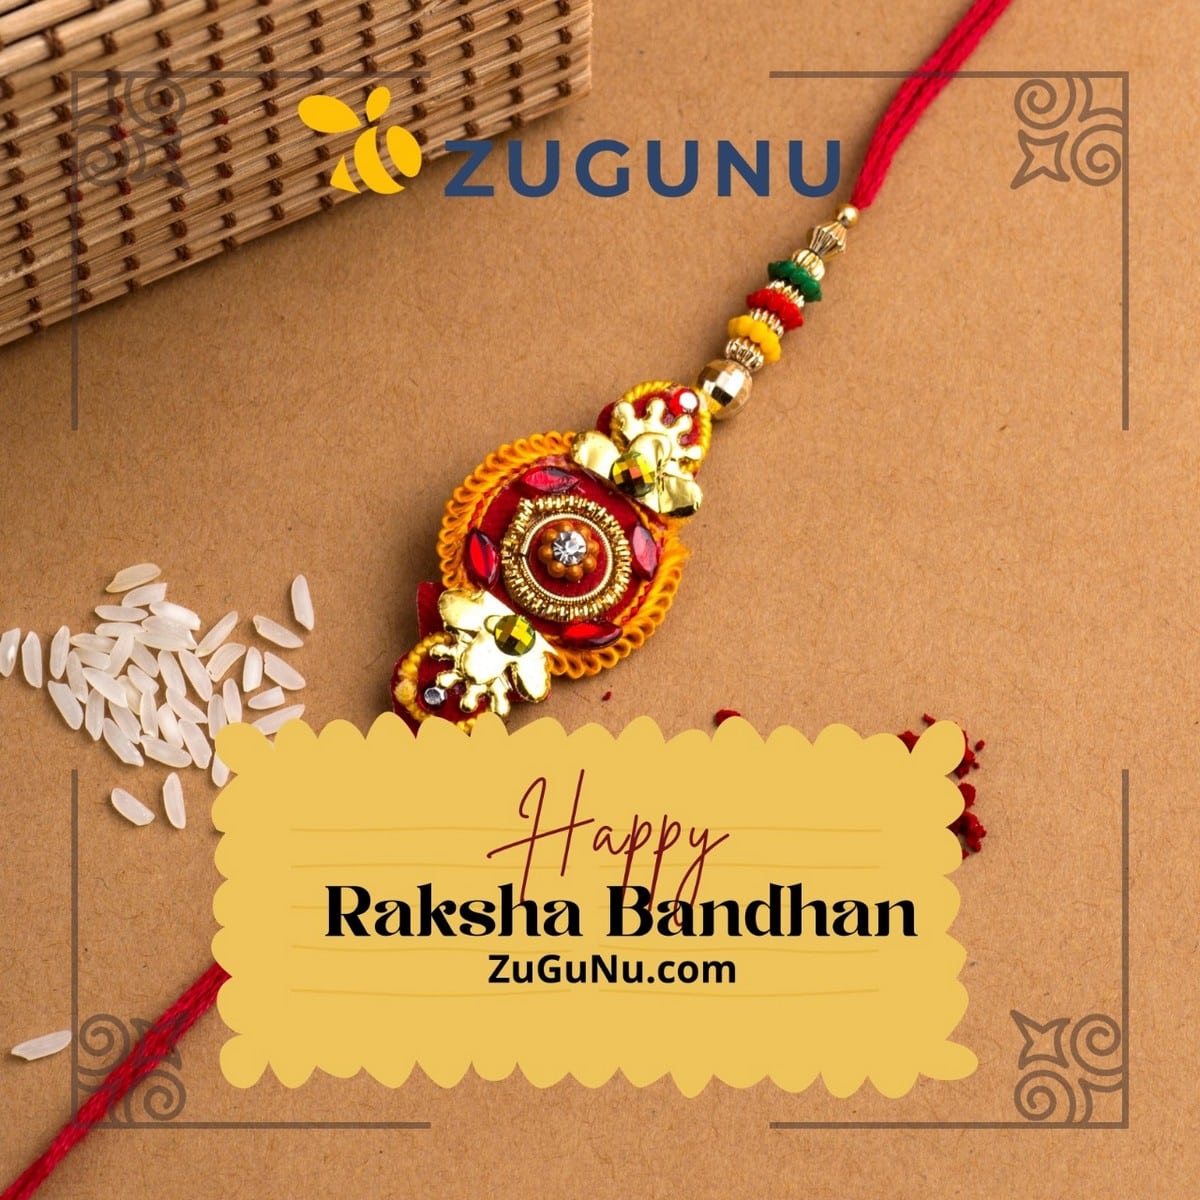 We Wish You All A Very Happy Raksha Bandhan